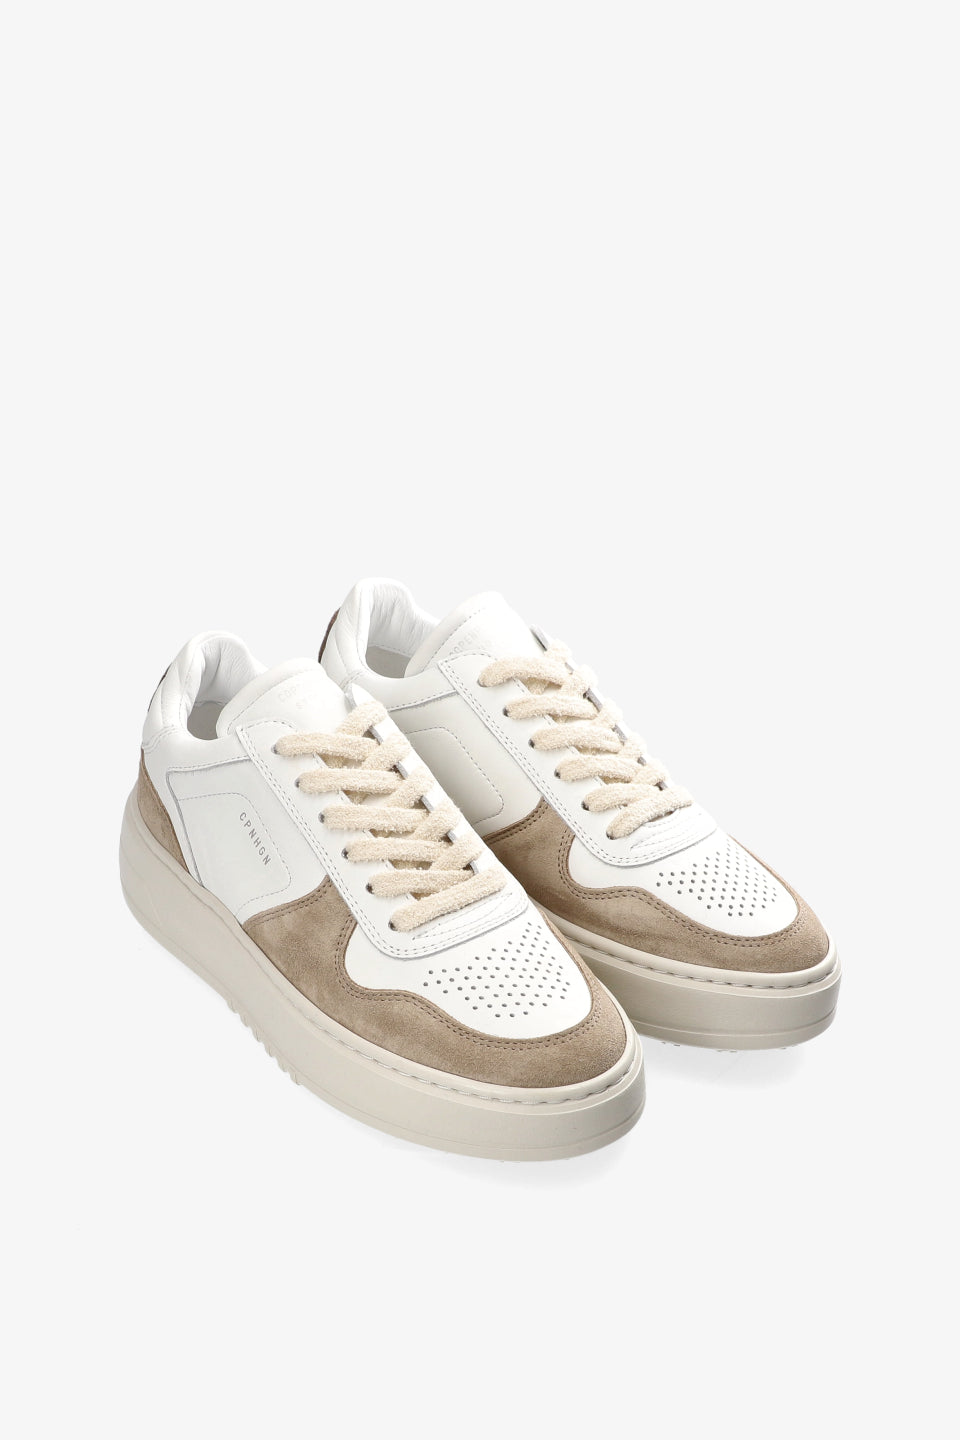 COPENHAGEN STUDIOS Sneaker CPH75 White/Nut